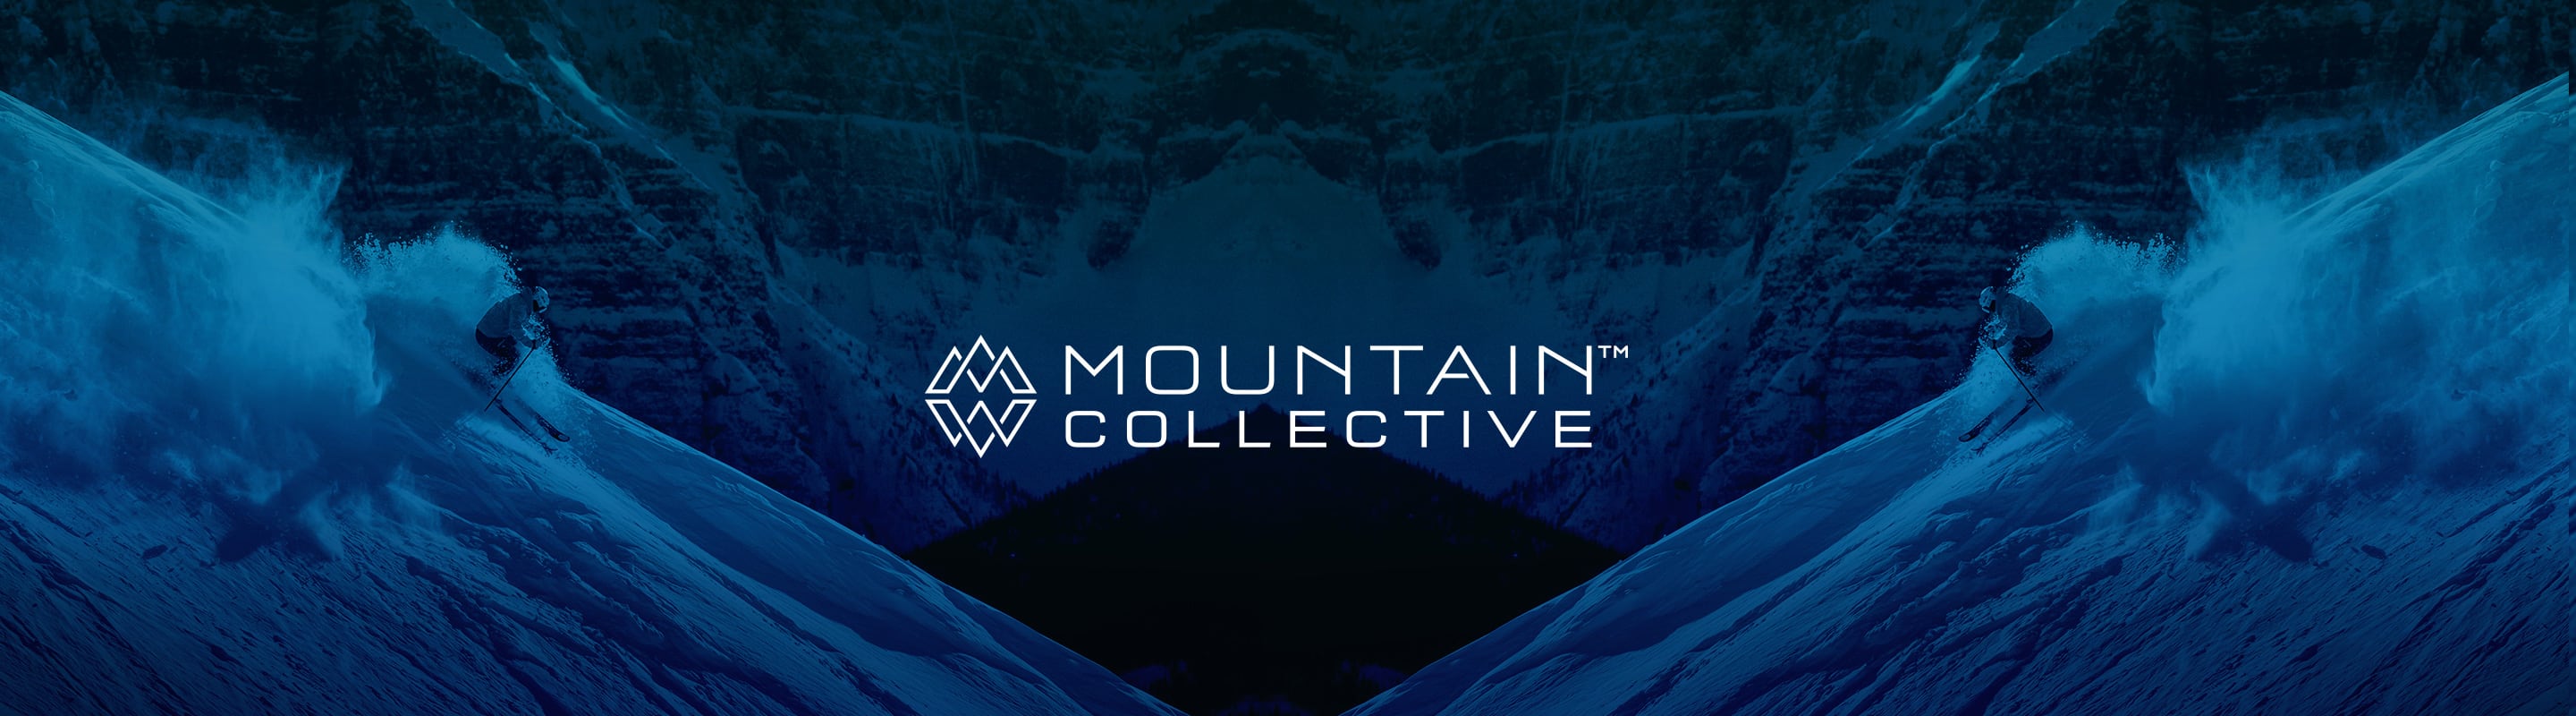 Mountain Collective Image